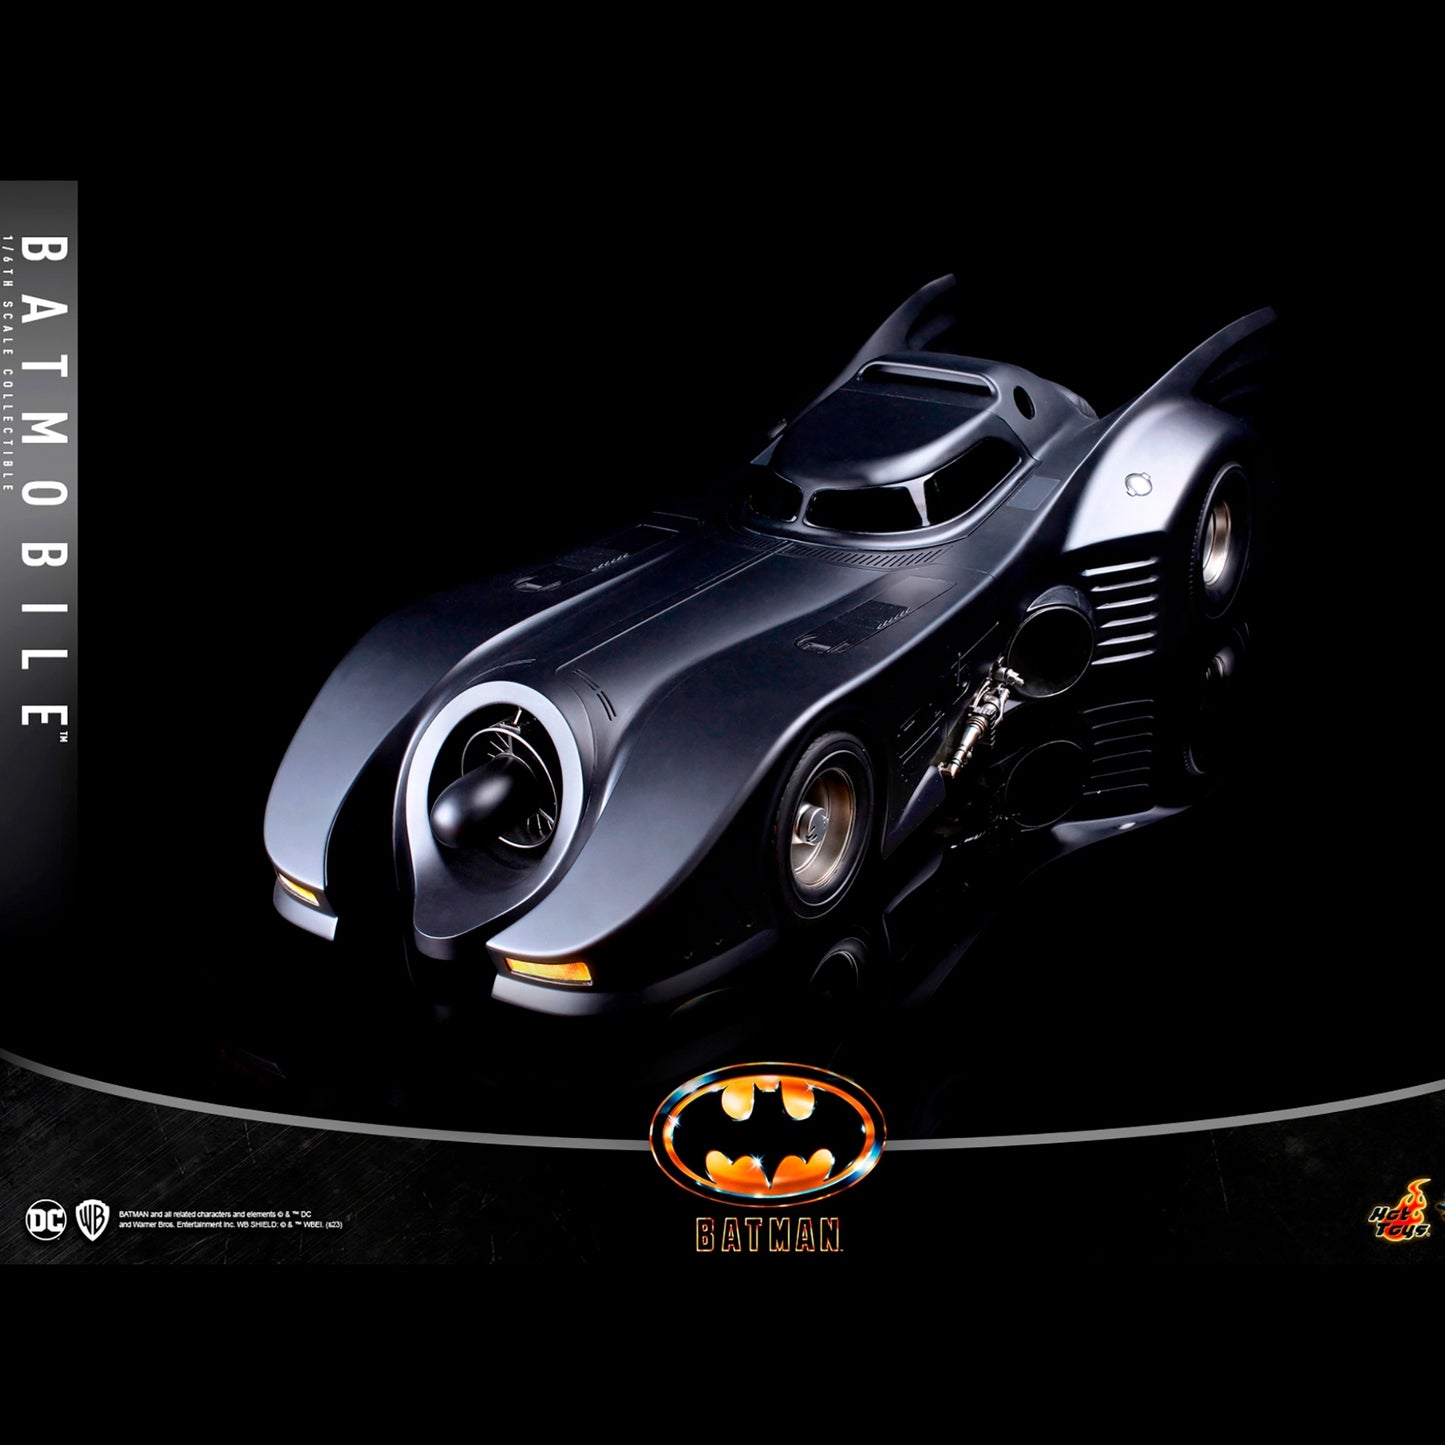 Warner Brothers' 1989 Batmobile Is Now on Sale